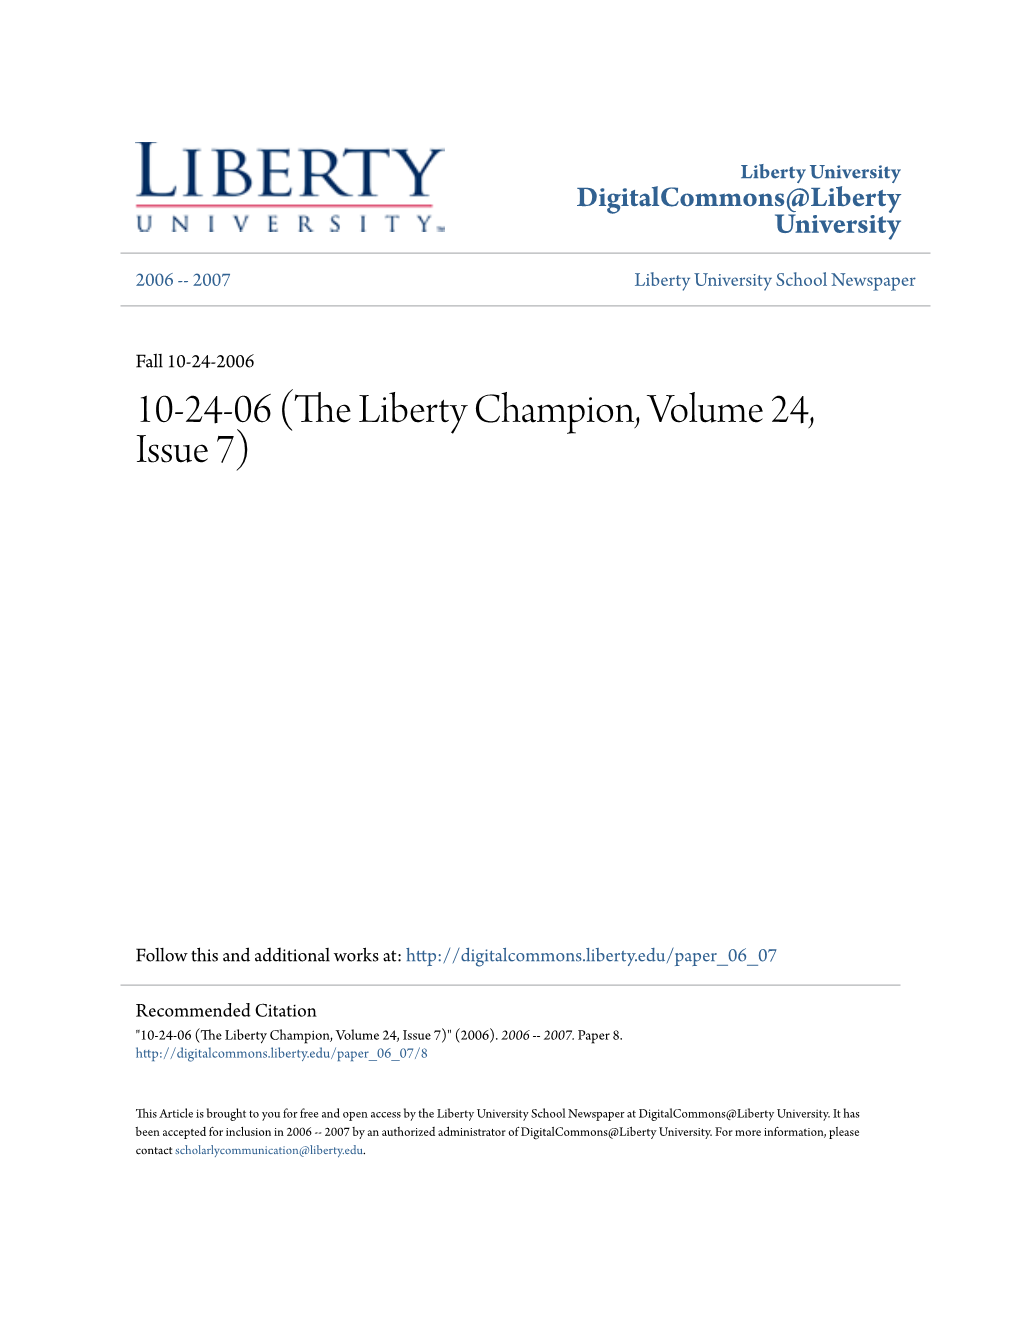 10-24-06 (The Liberty Champion, Volume 24, Issue 7)